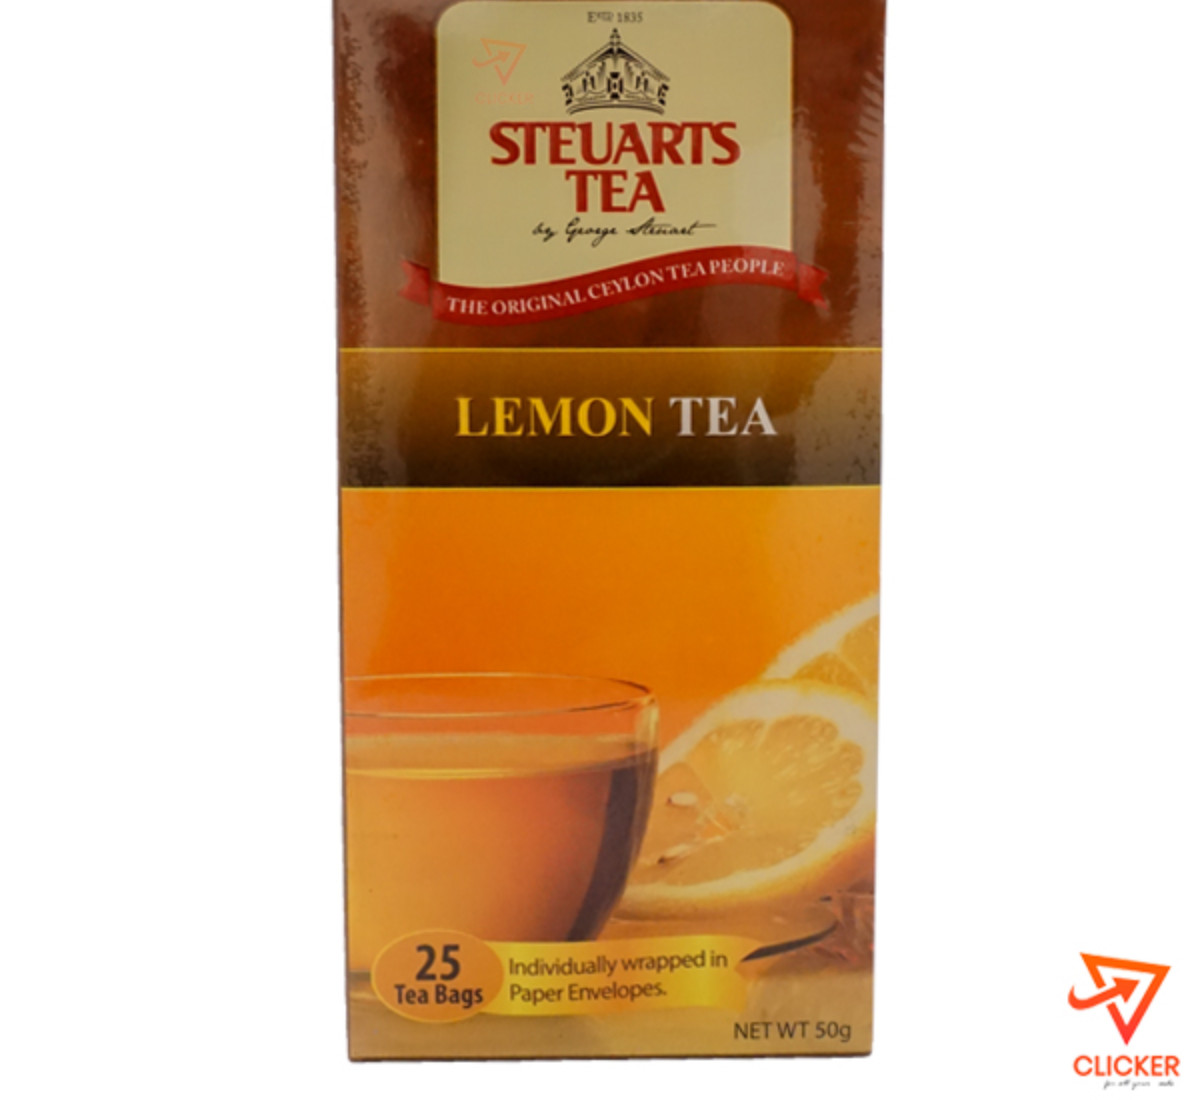 Clicker product 50g GEORGE STEURARTS tea lemon tea (25tea bags) 934